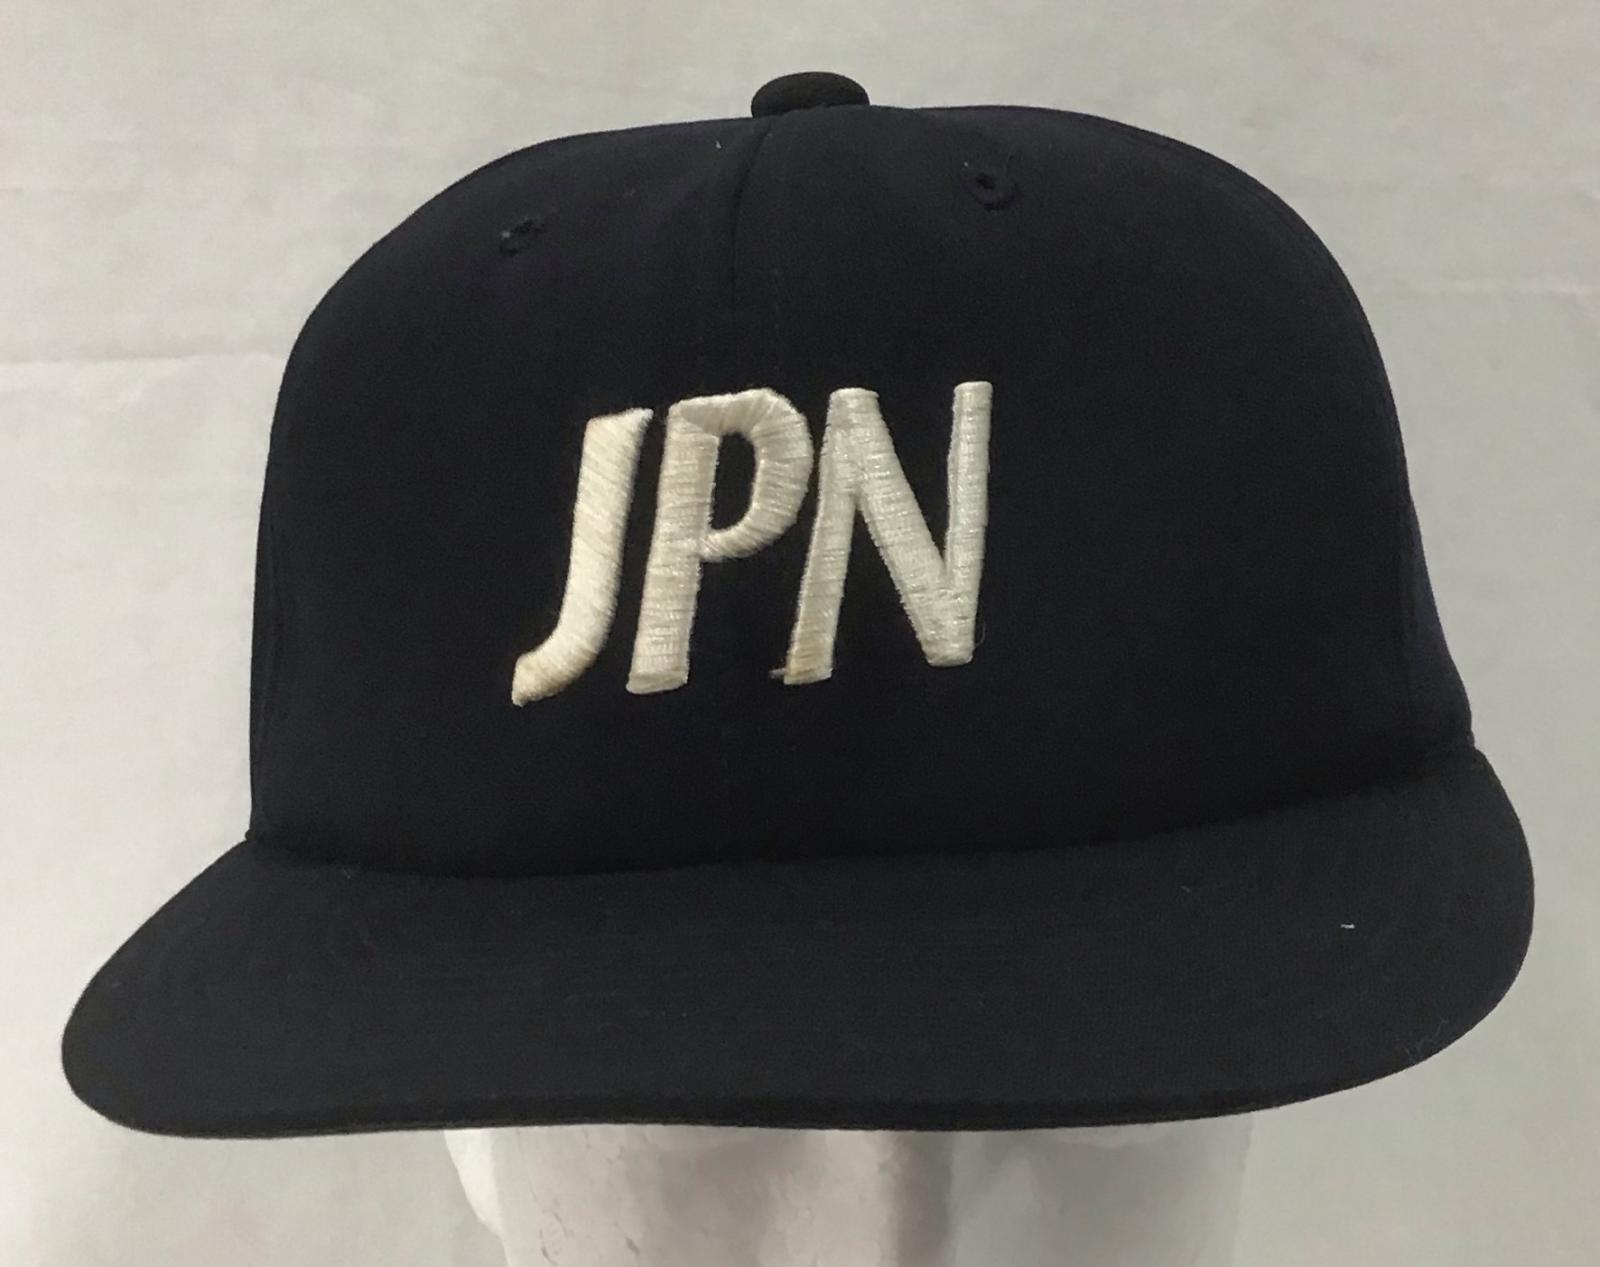 Japan Team baseball cap